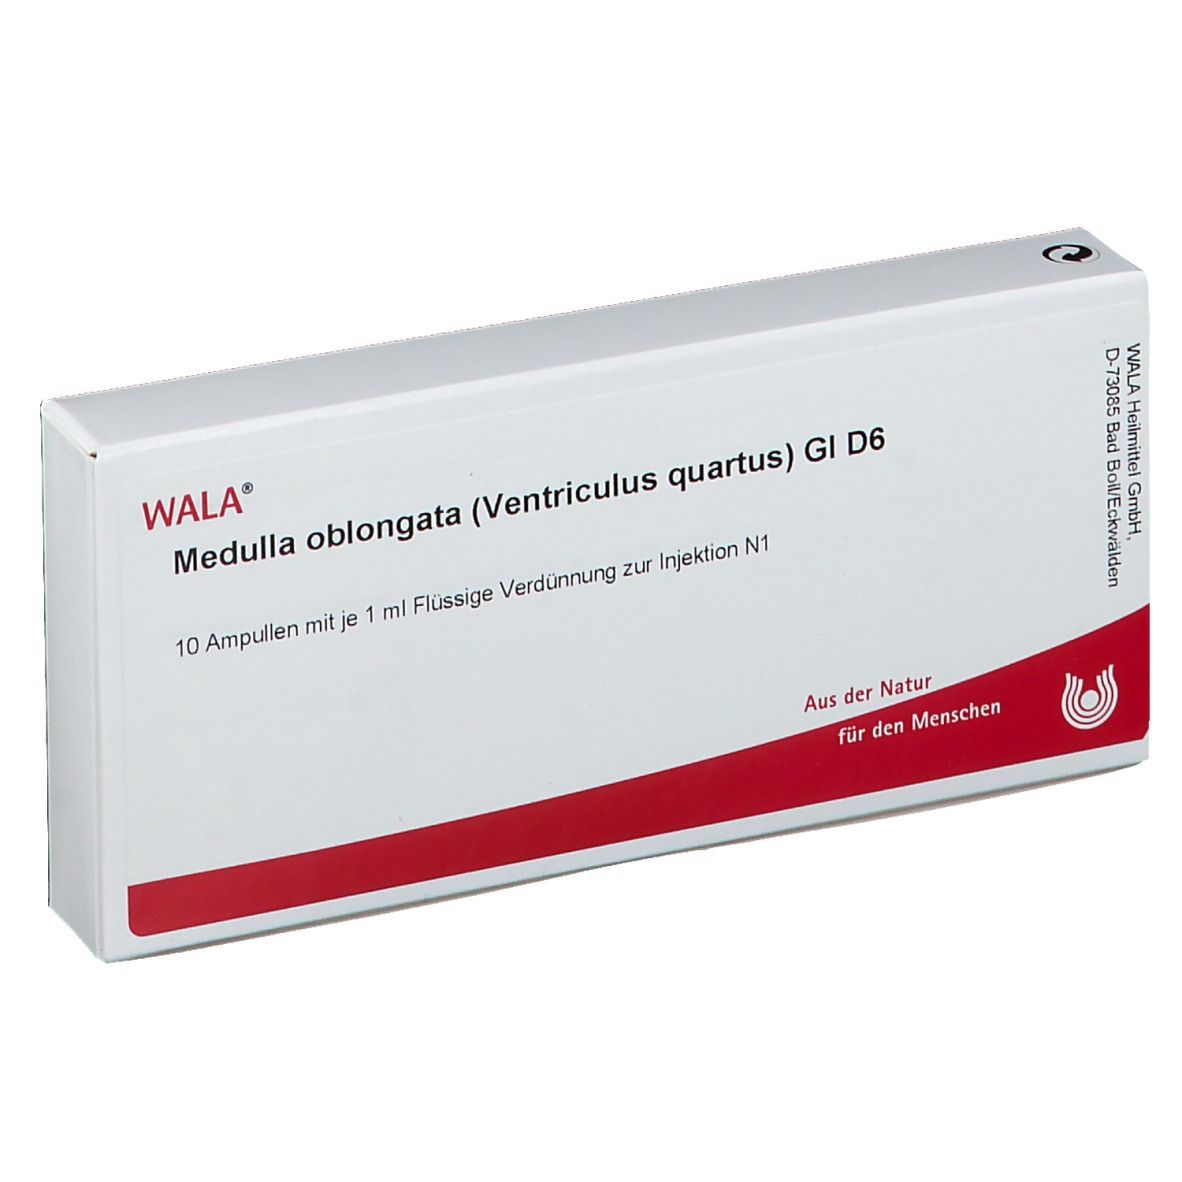 WALA® Medulla oblongata Ventriculus quartus Gl D 6